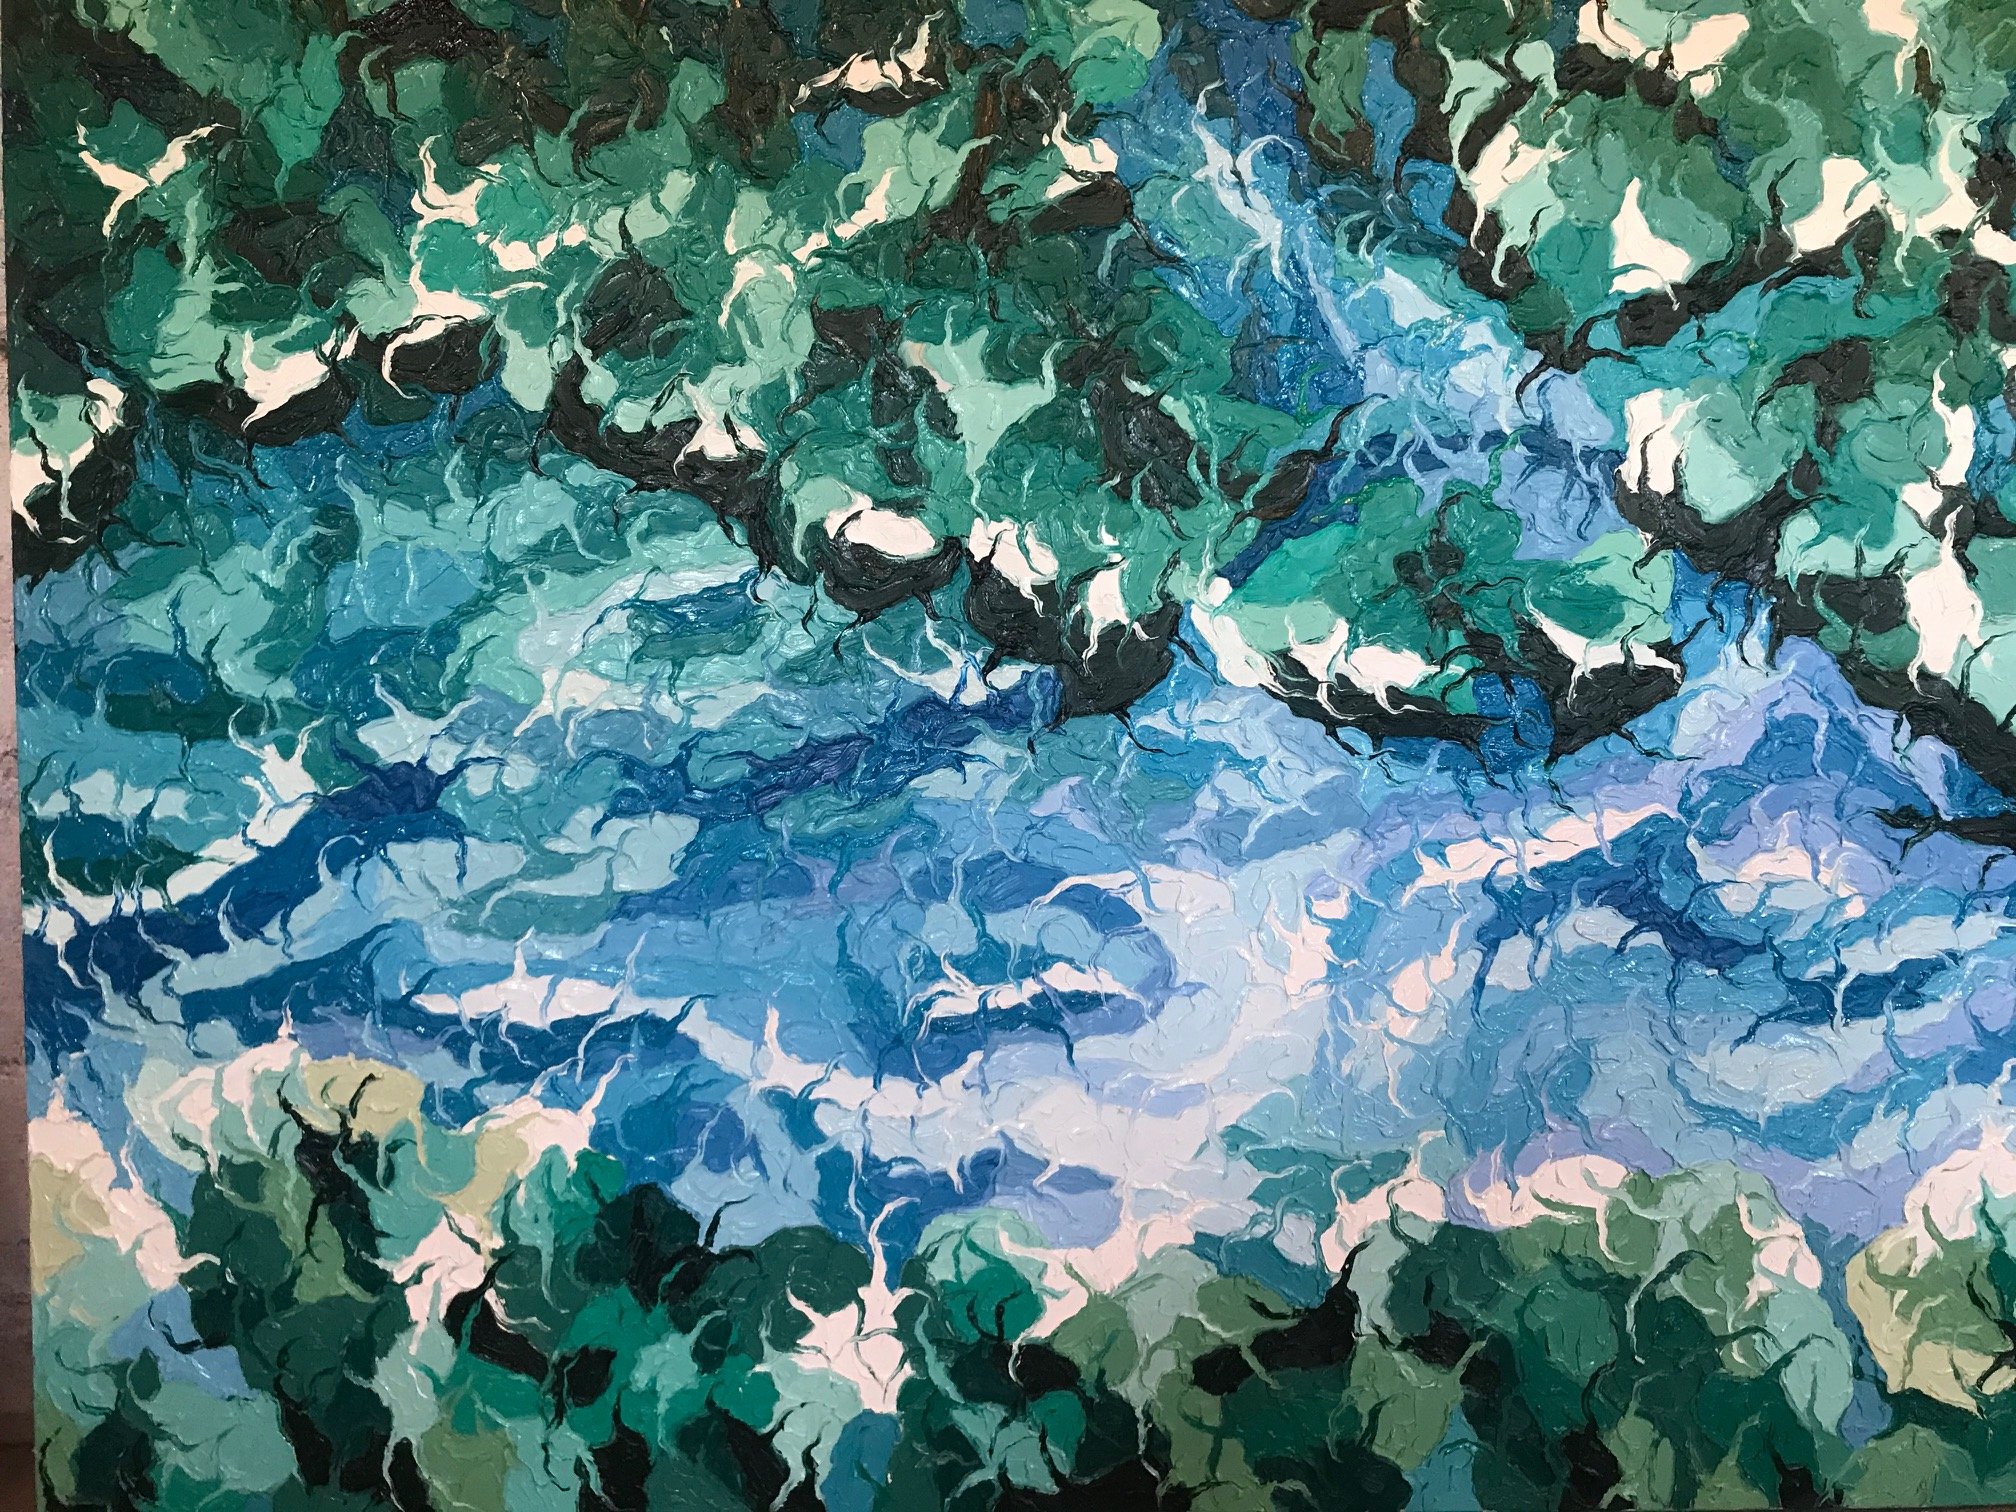 Cenote, series, 68 x 40, oil on canvas